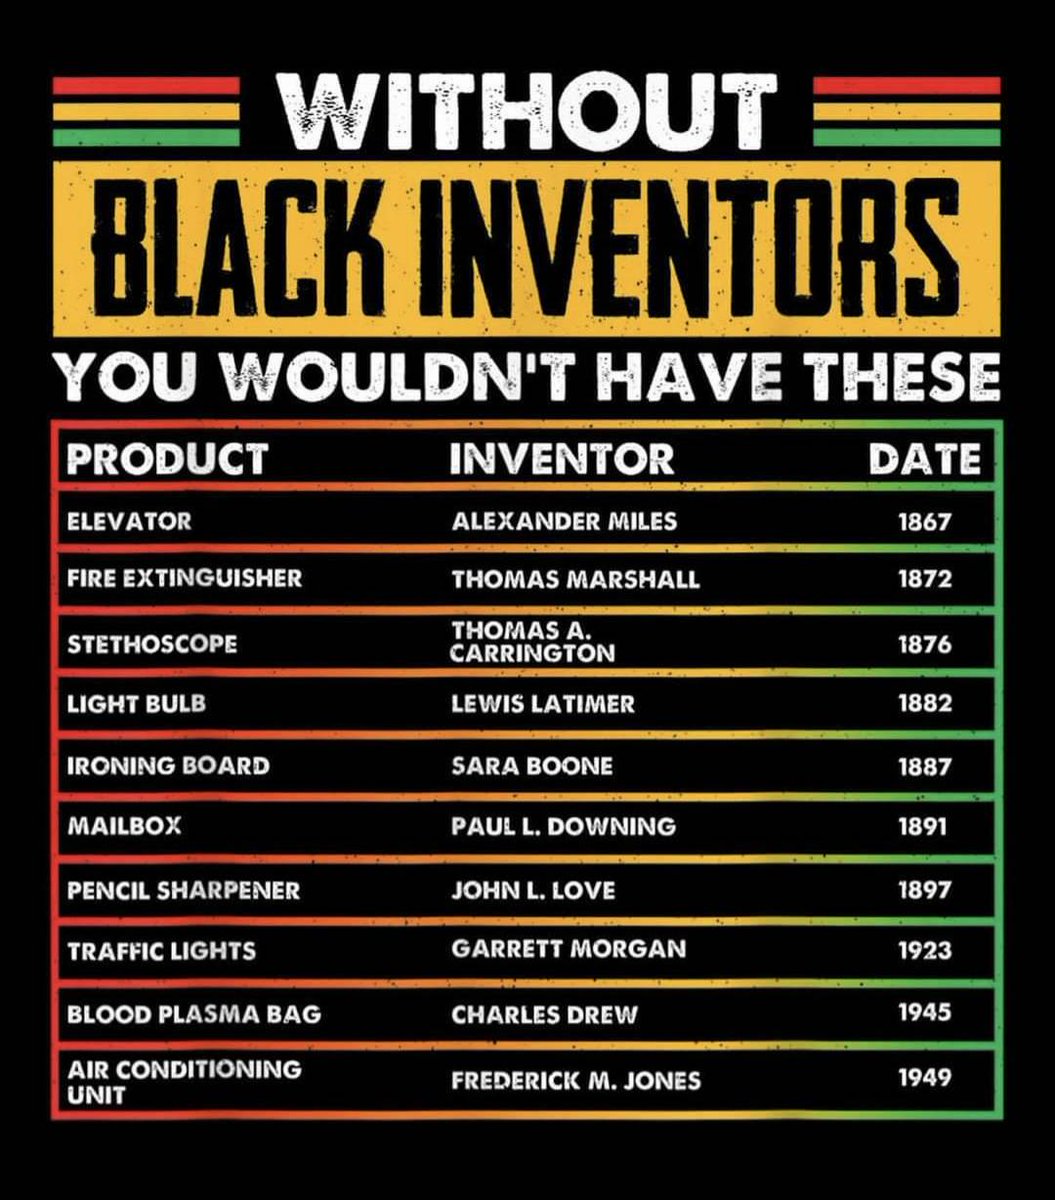 Now you know!

#blackinventors #higherlearning #Wednesday #mondaymorningmindfulness #blackpeoplemadeeverything